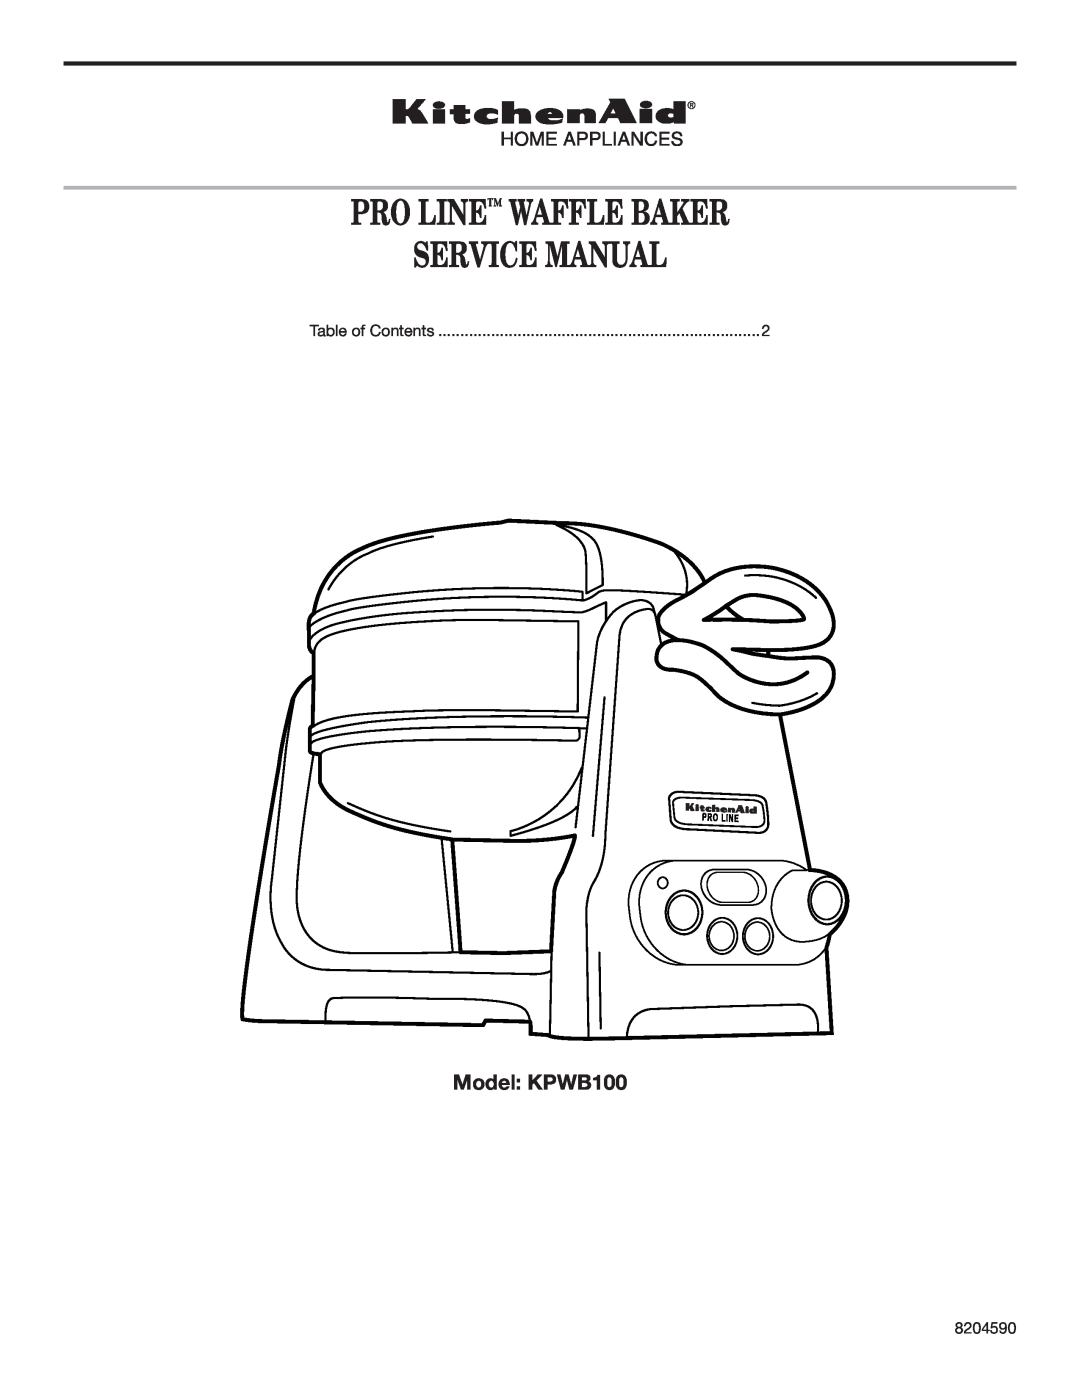 KitchenAid KPWB100 manual Model, Waffle Baker, P R O L I N E S E R I E S, Introduction, Section Contents 